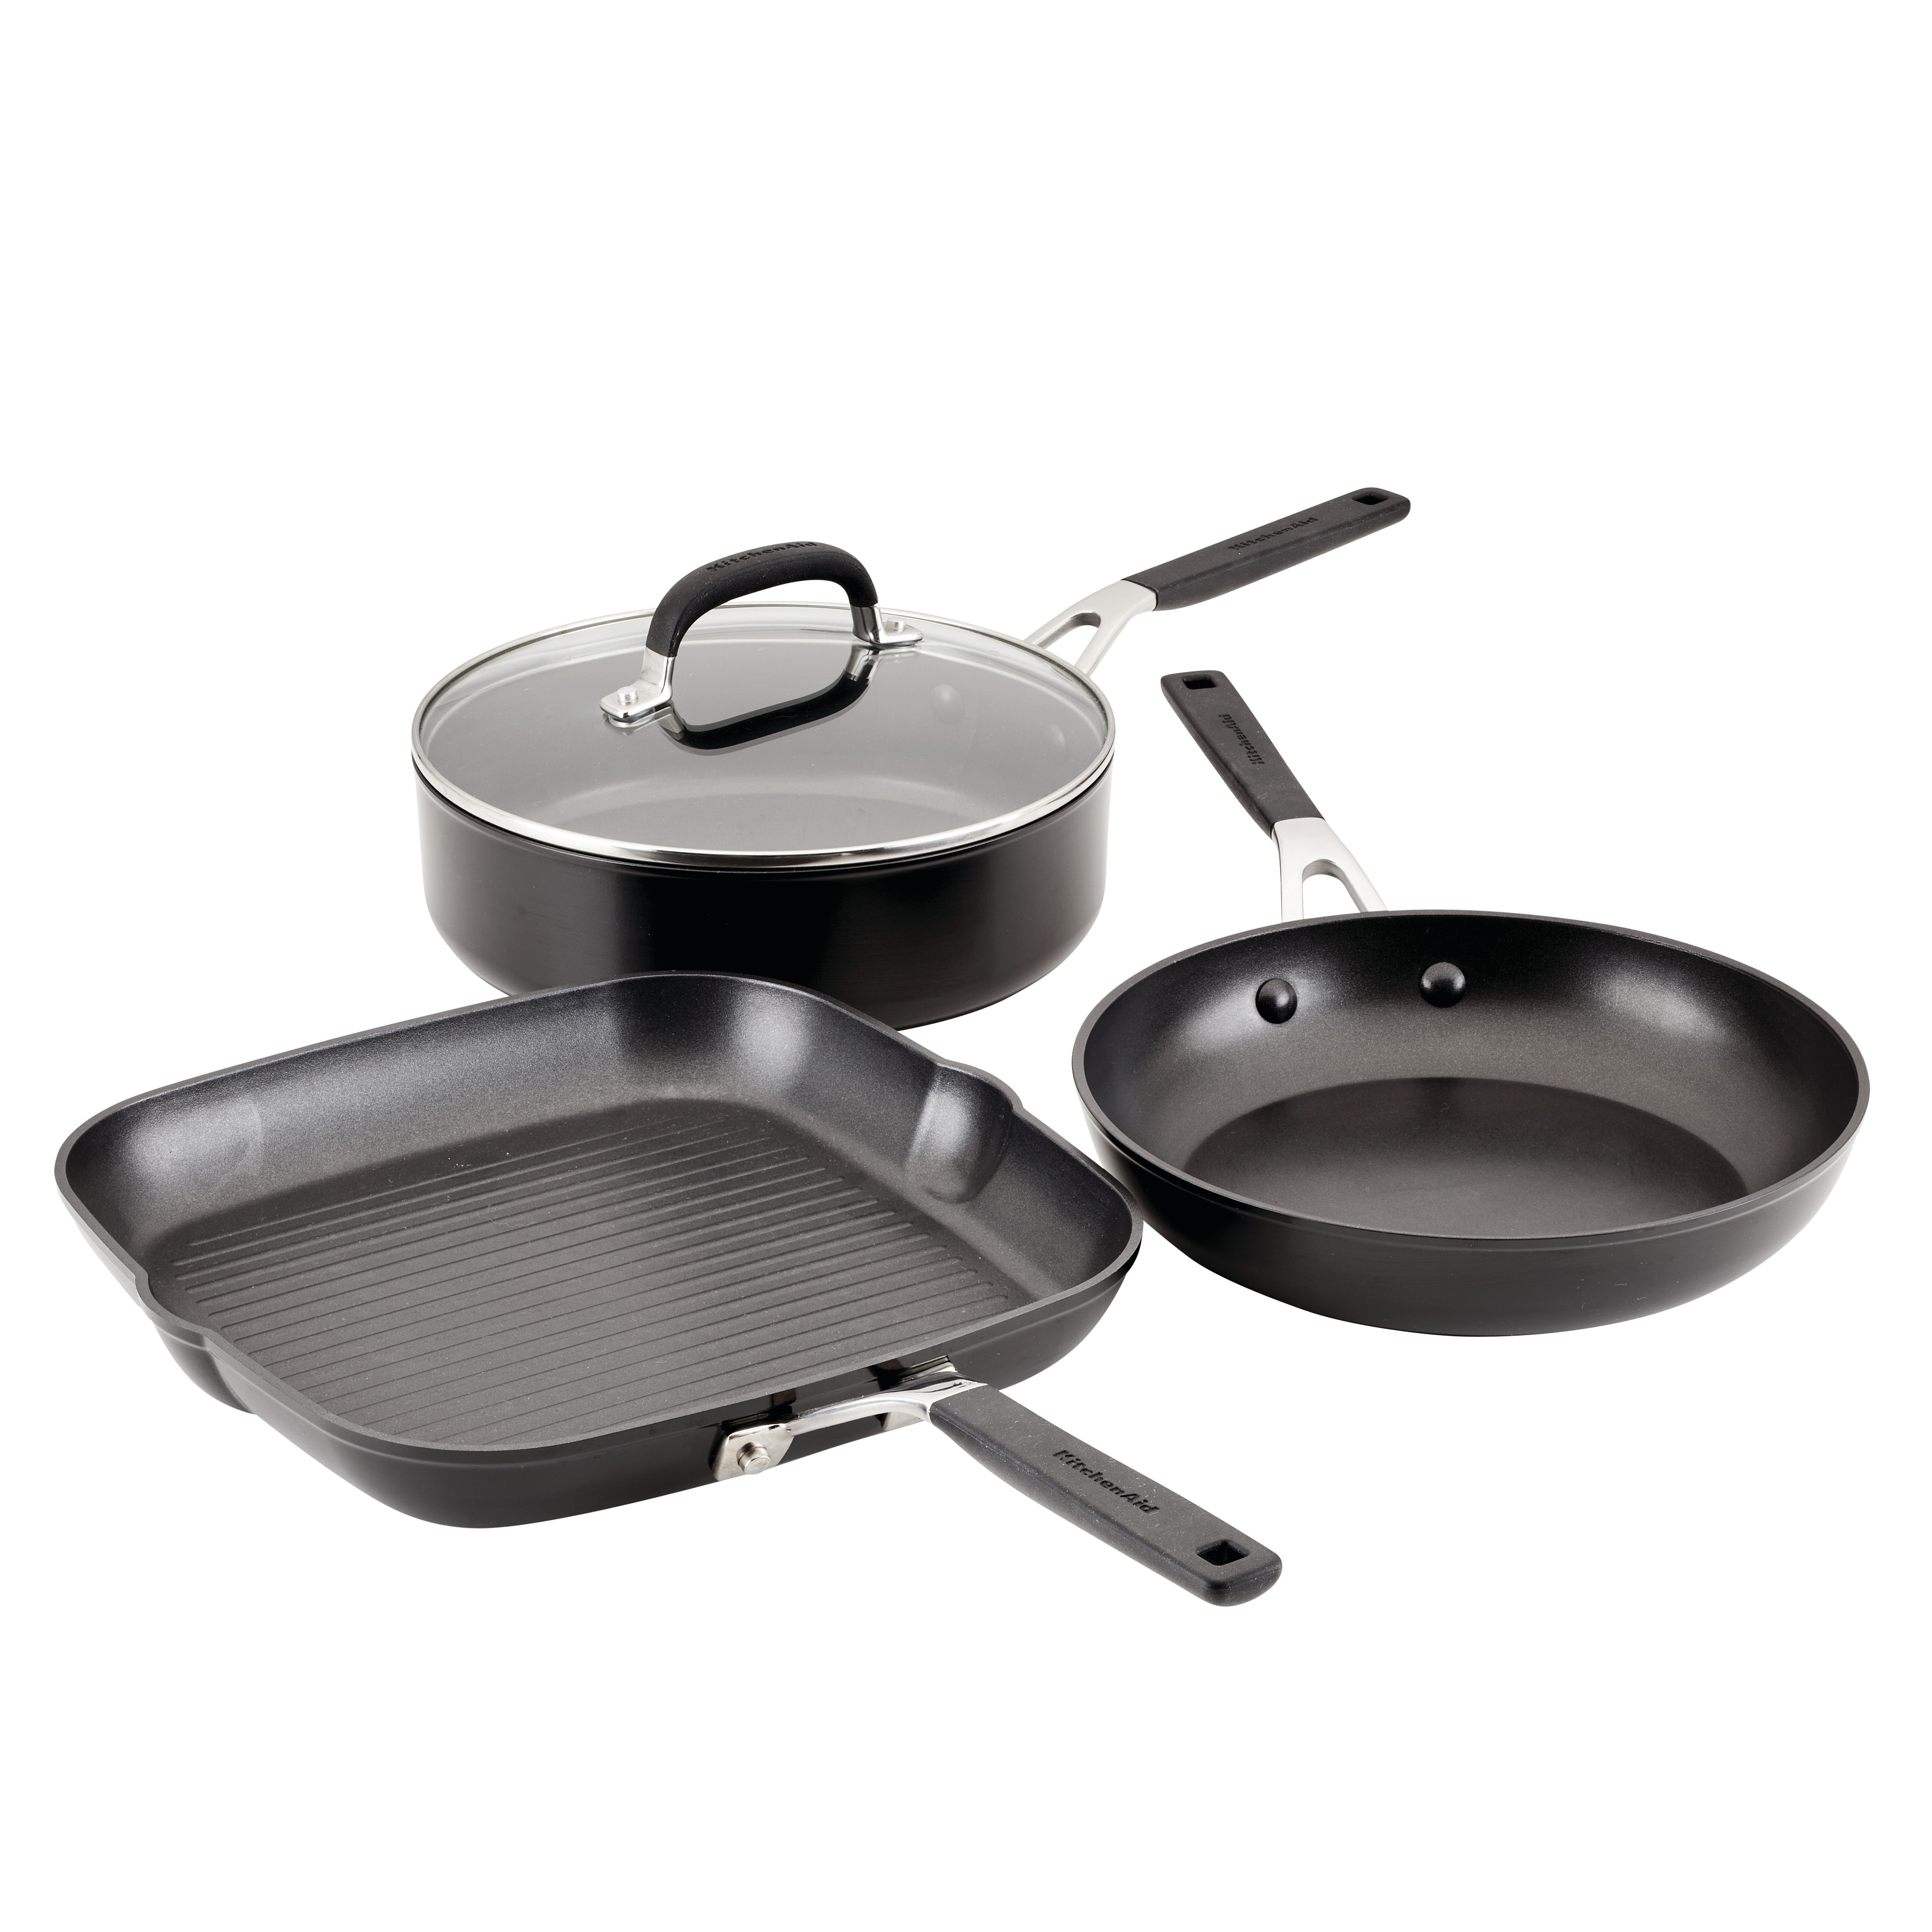 KitchenAid Hard Anodized Nonstick Cookware Pots and Pans Set, 10